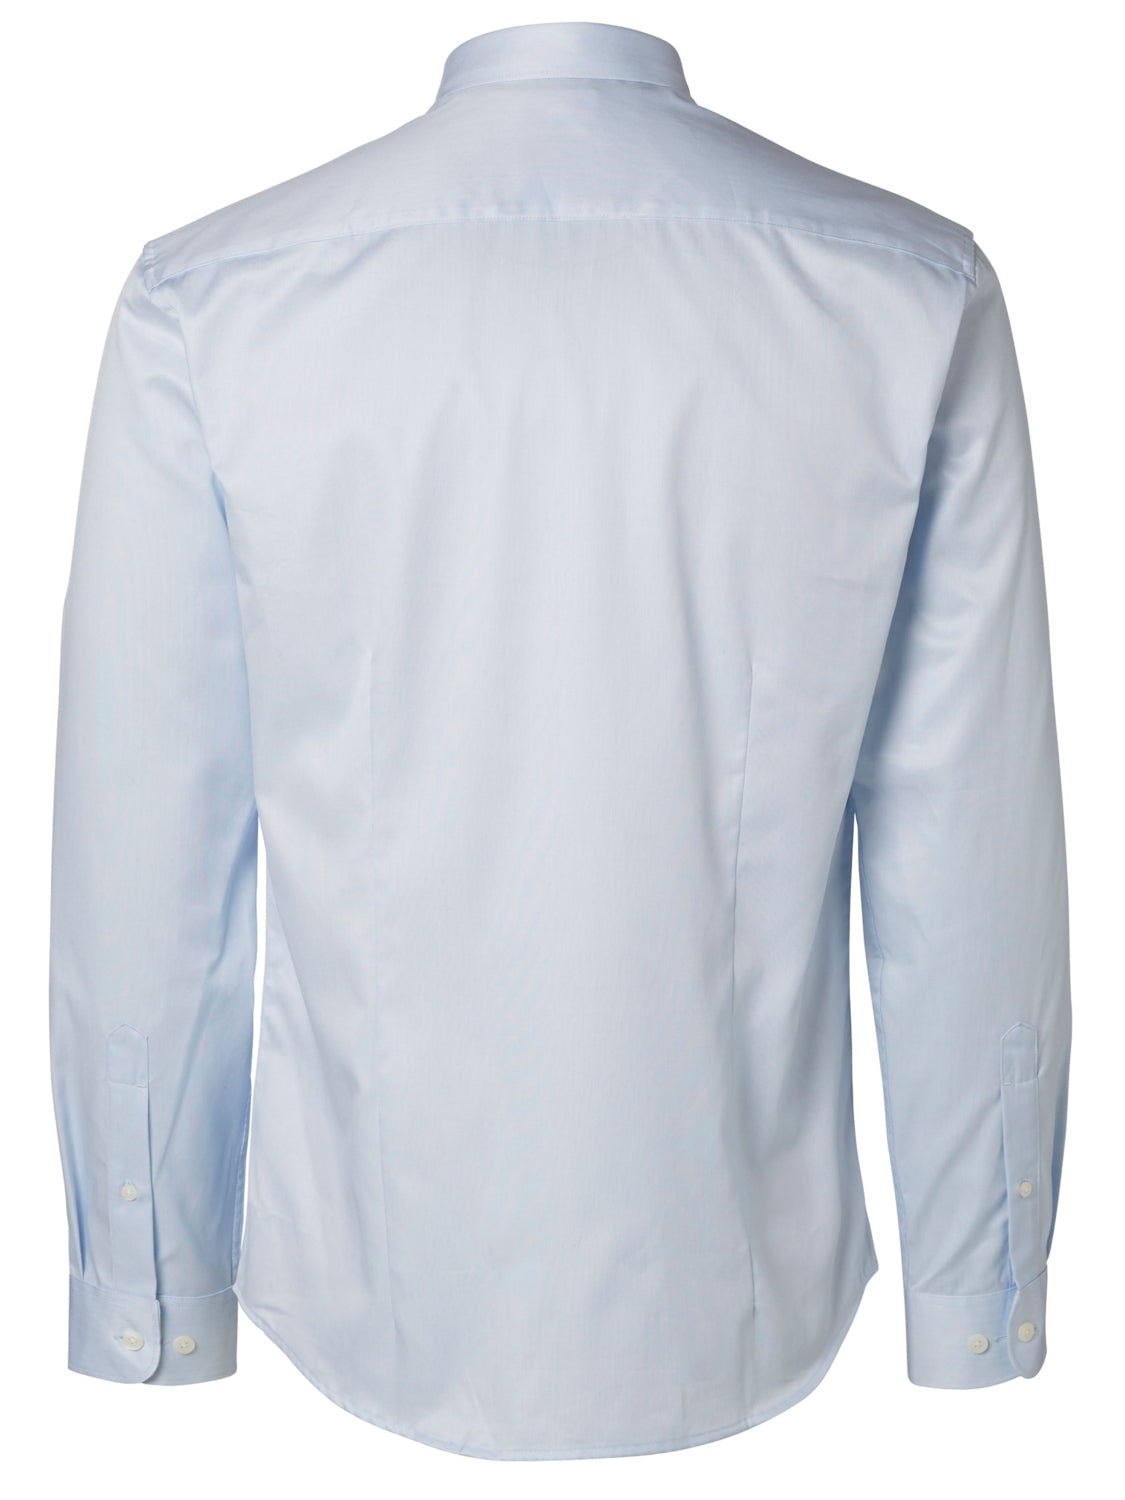 SHDONE-PELLESANTIAGO Shirt - Light Blue